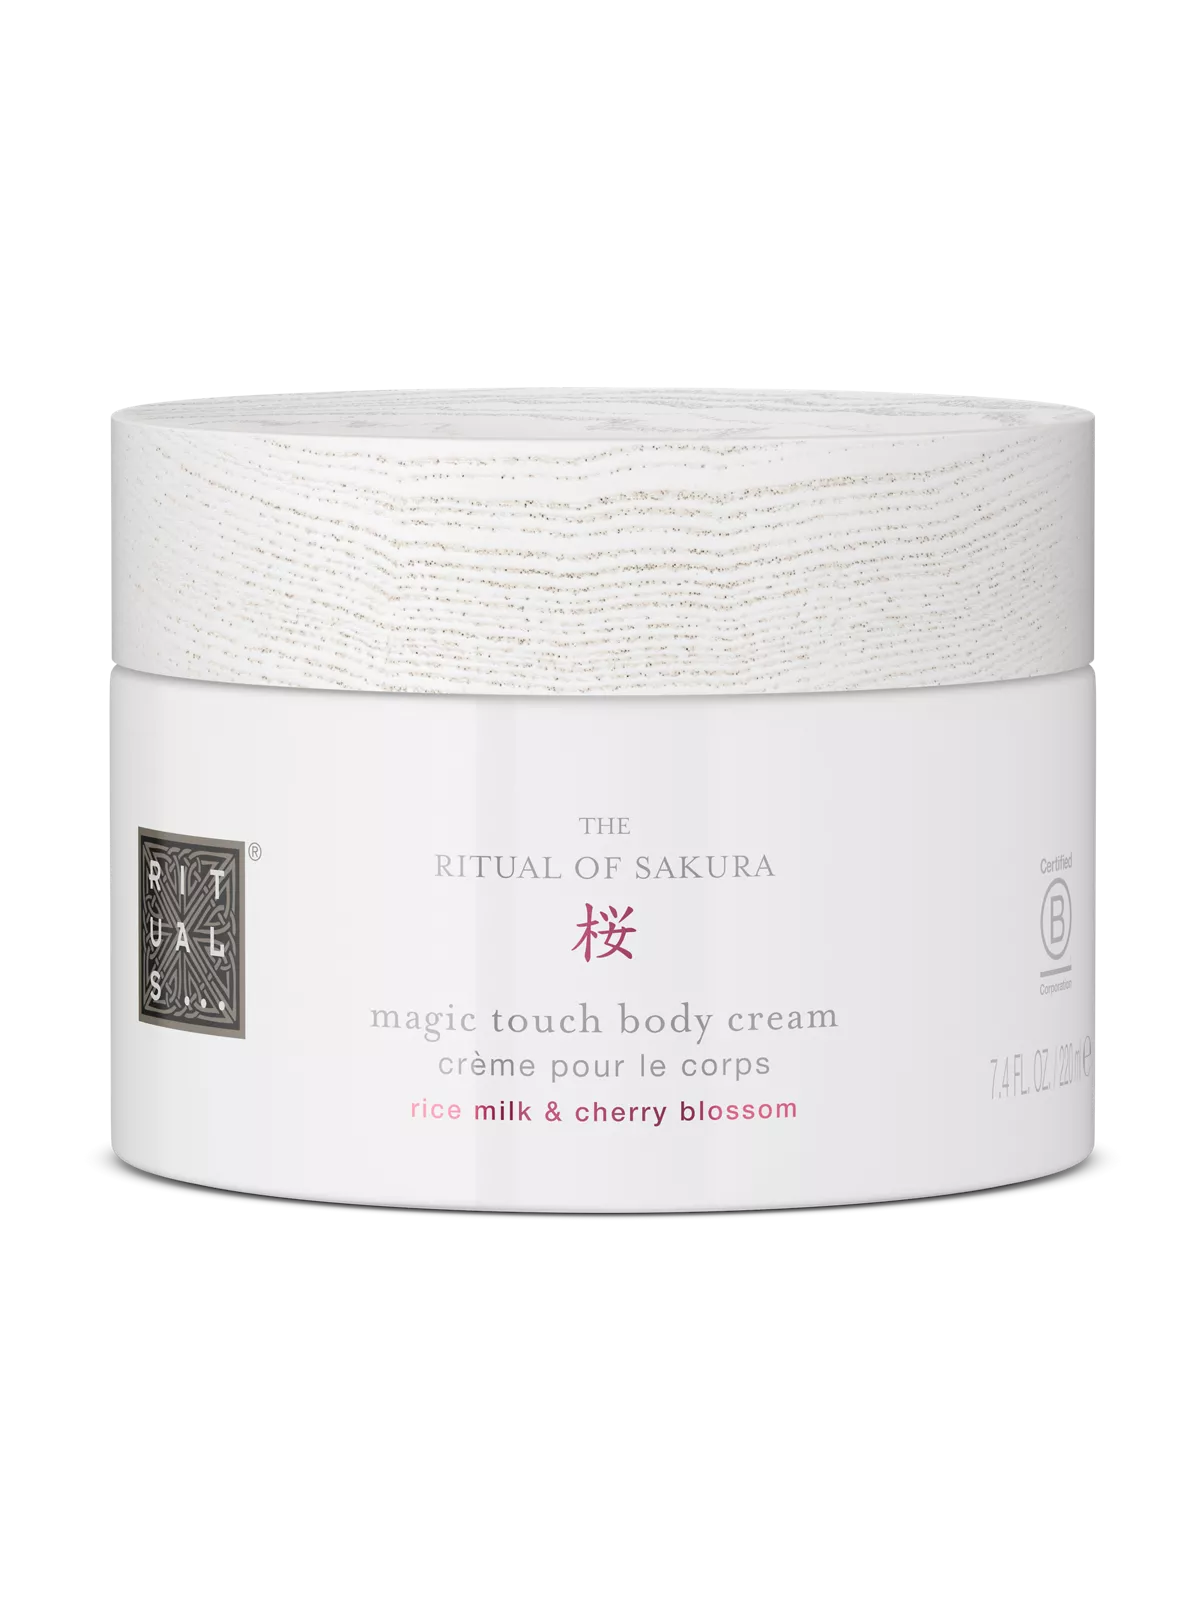 The Ritual of Sakura Body Cream